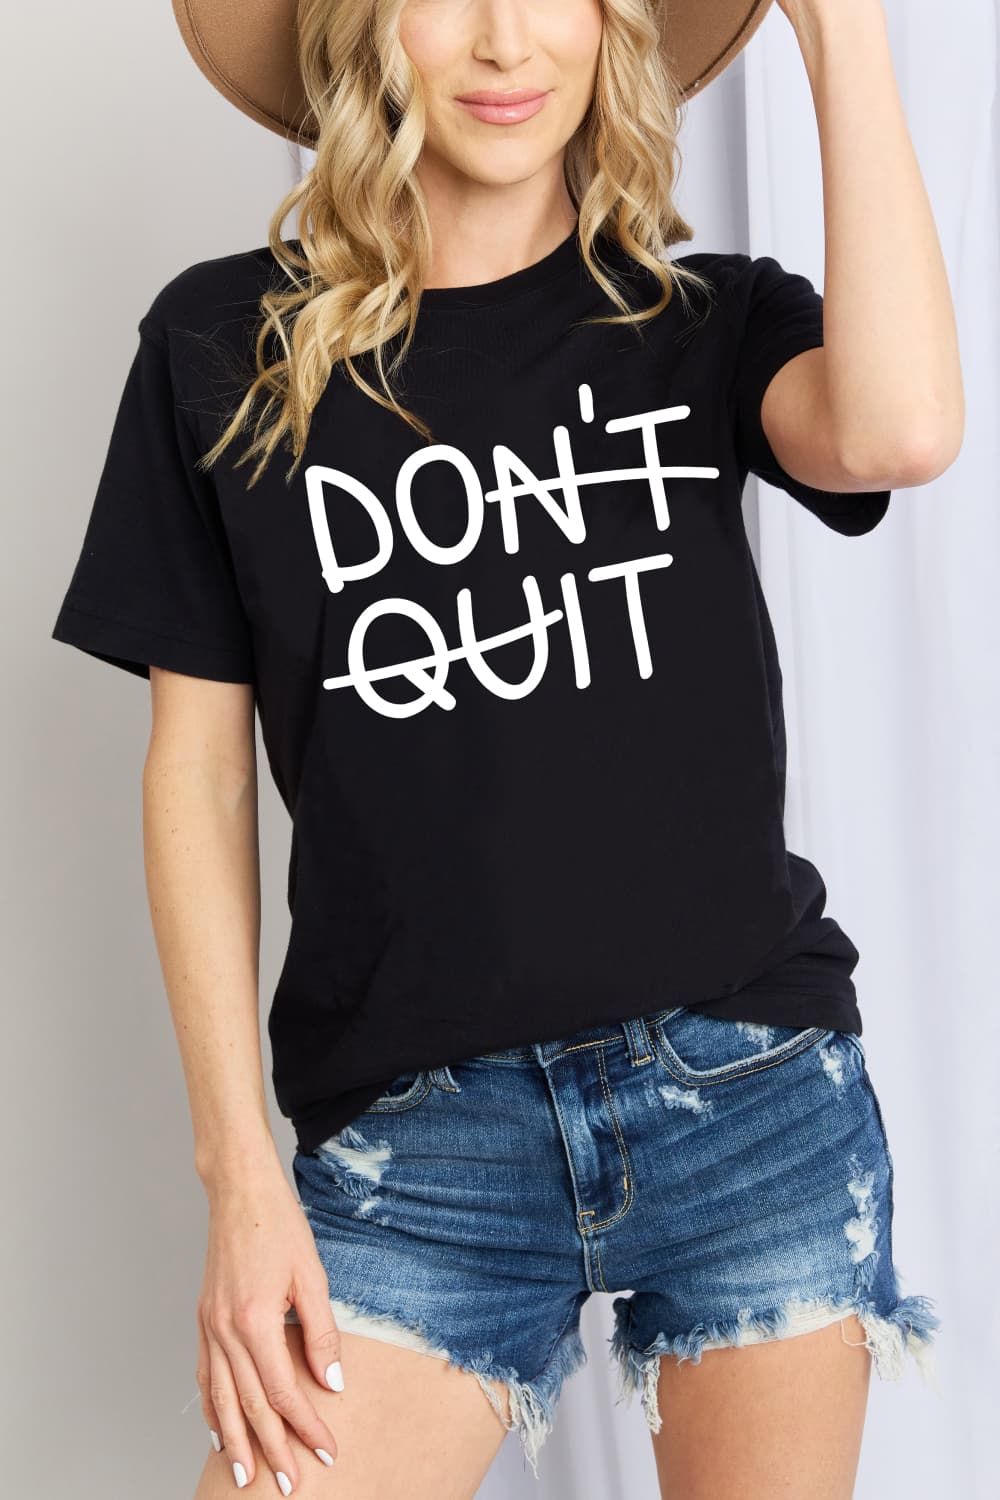 DON'T QUIT Graphic T-Shirt